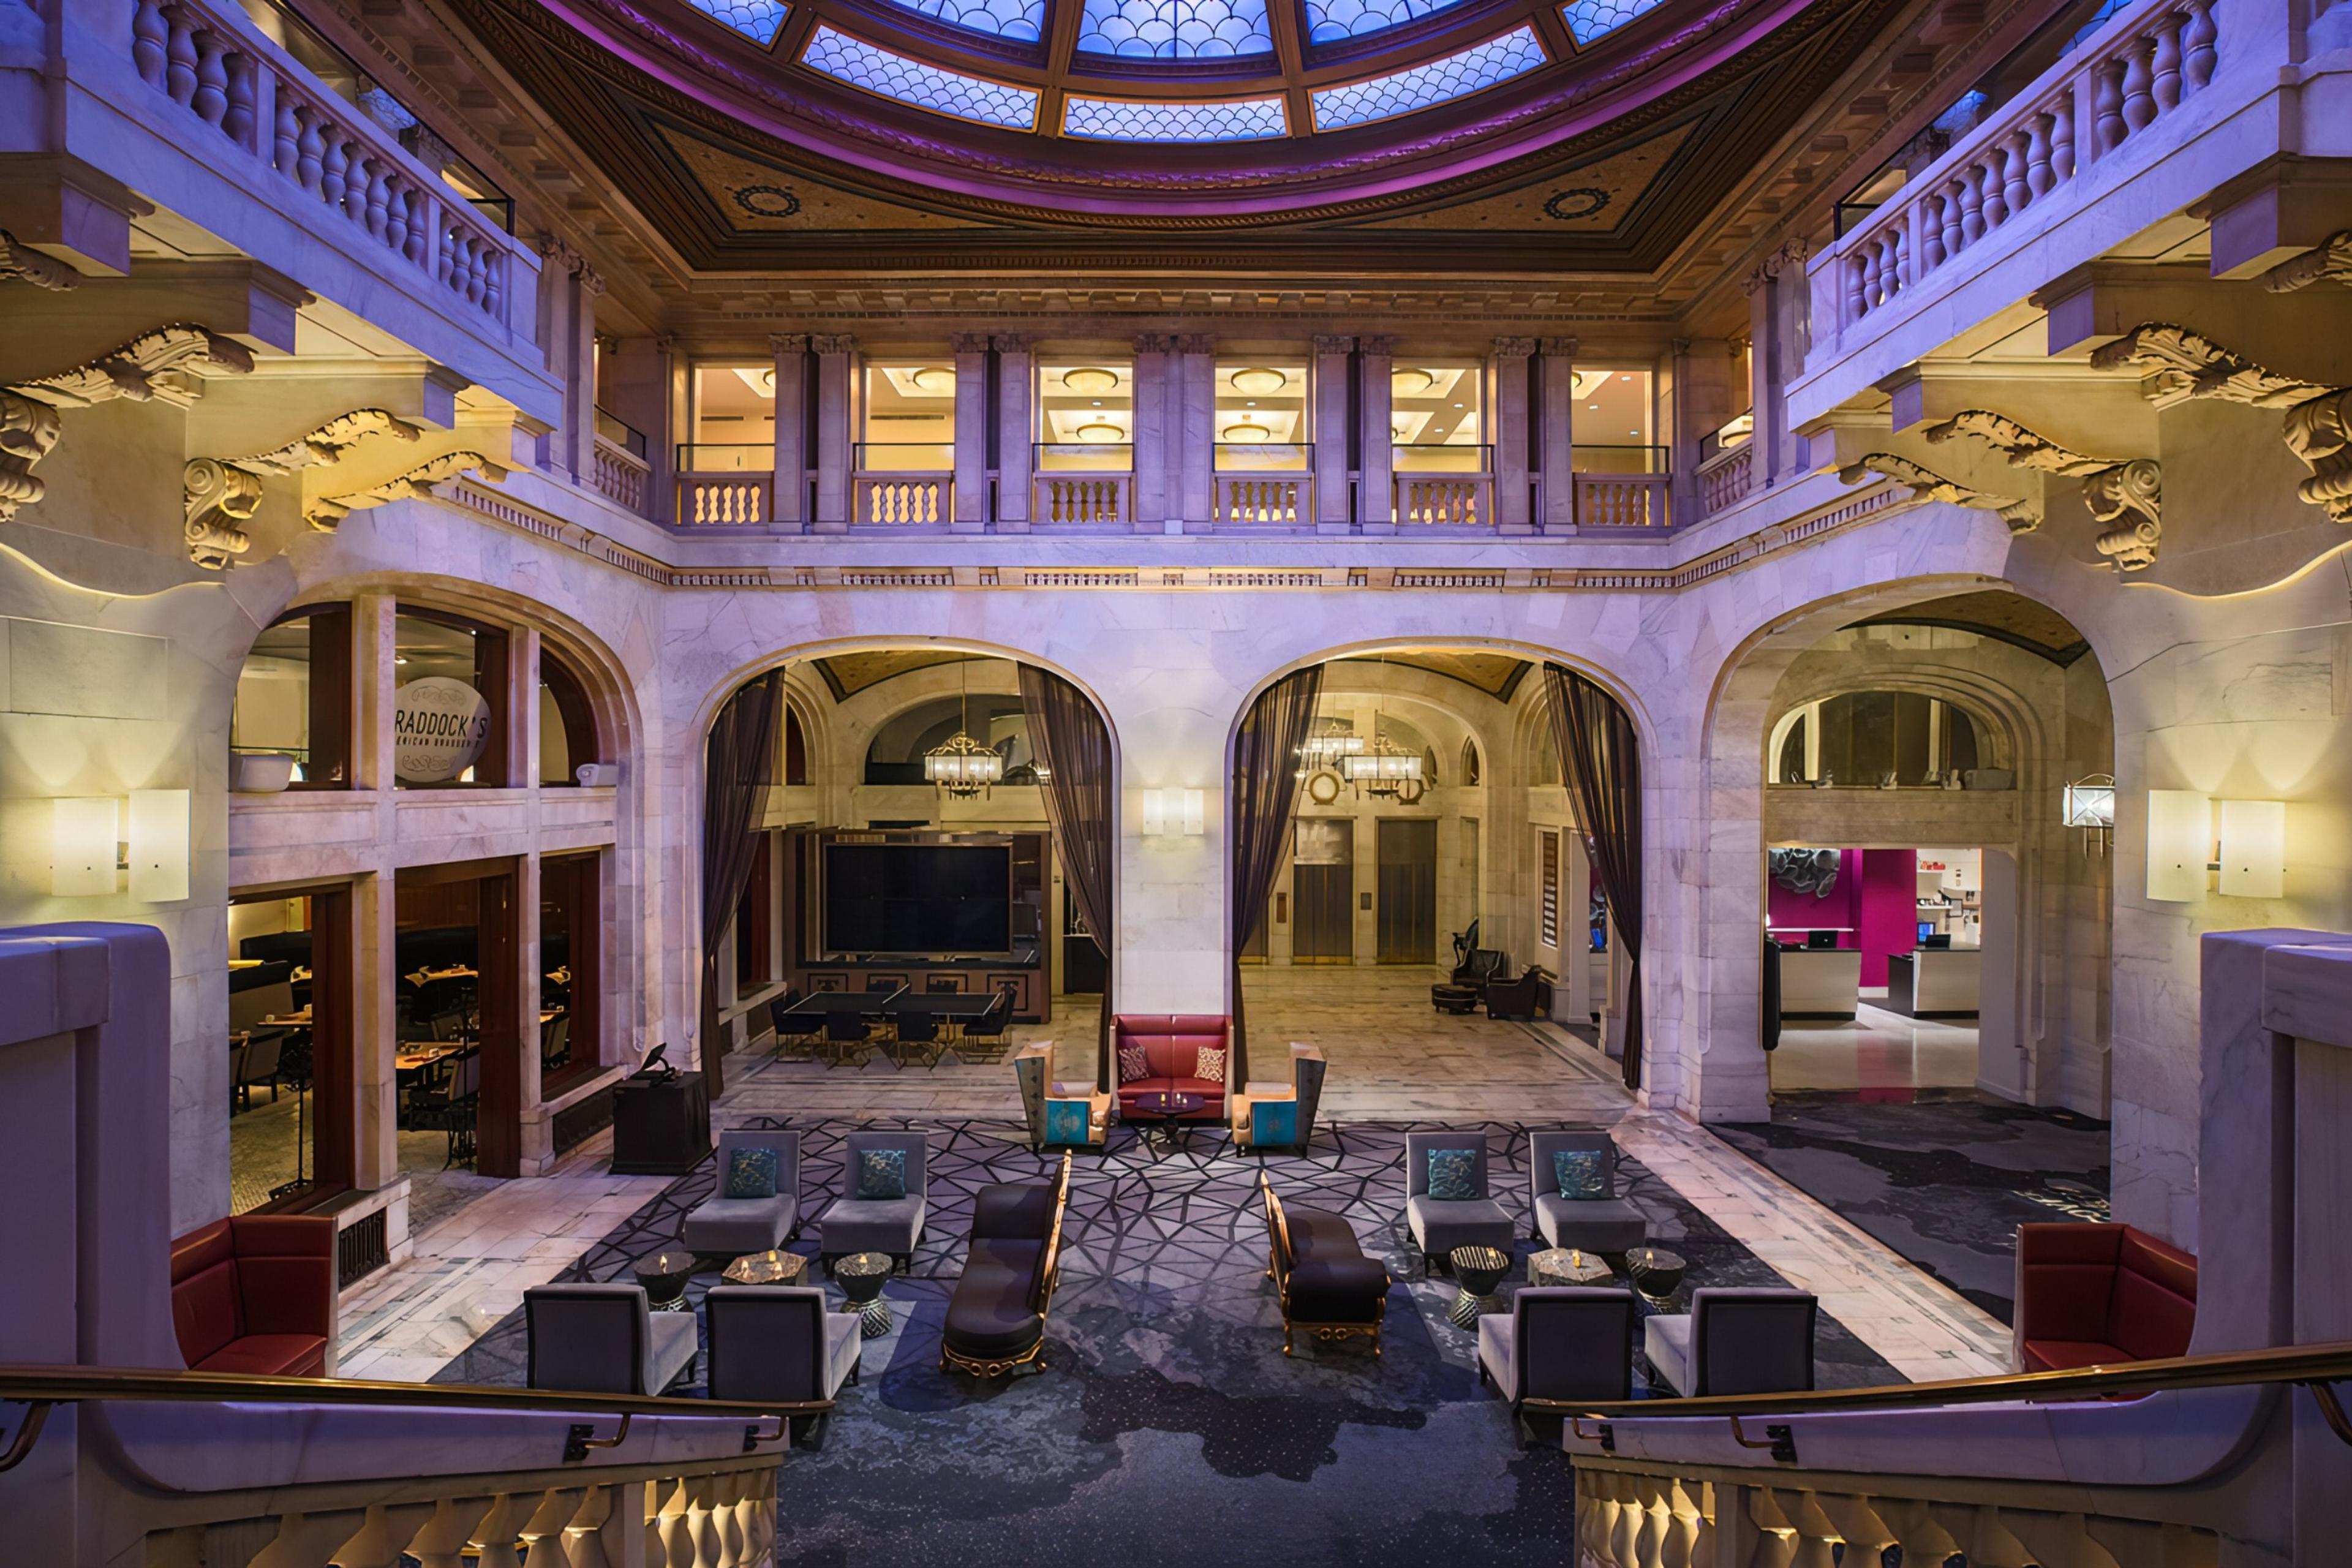 Renaissance Pittsburgh Hotel